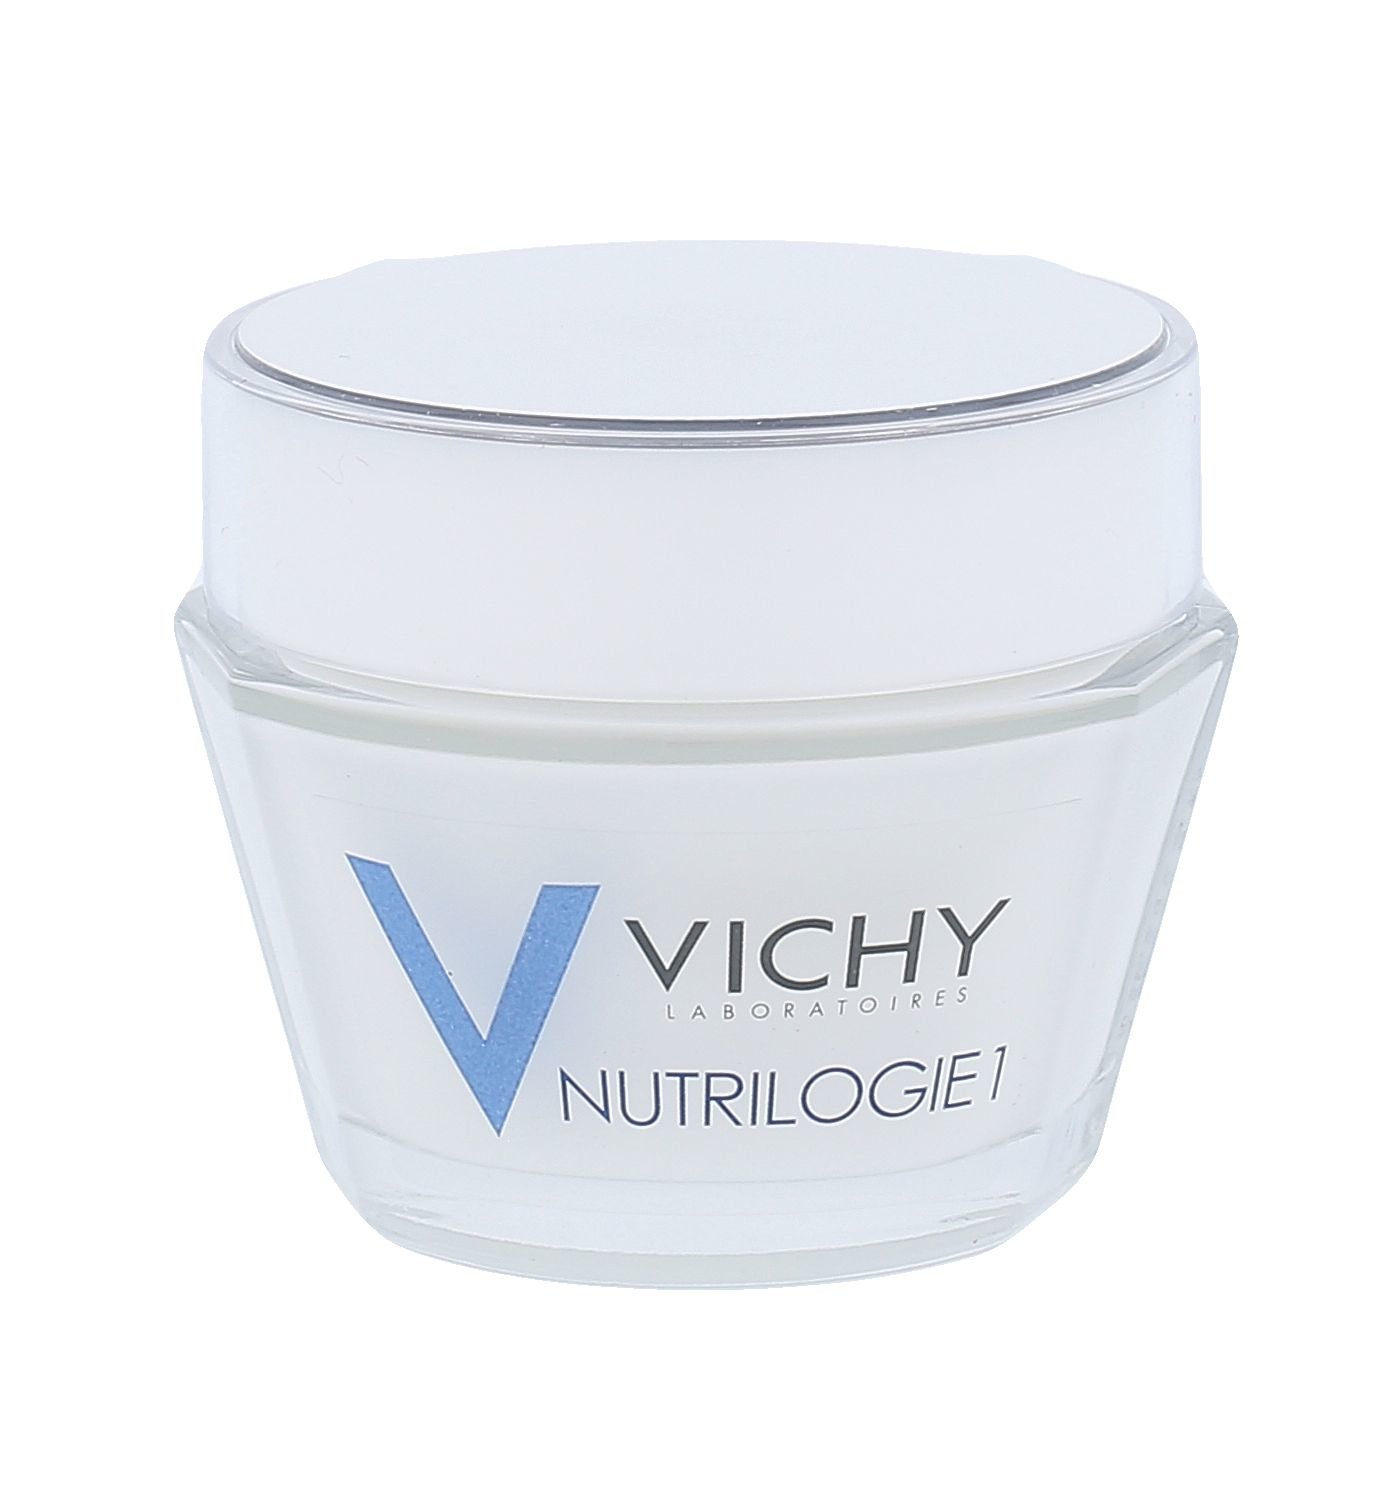 Vichy Nutrilogie 1 Day Cream For Dry Skin